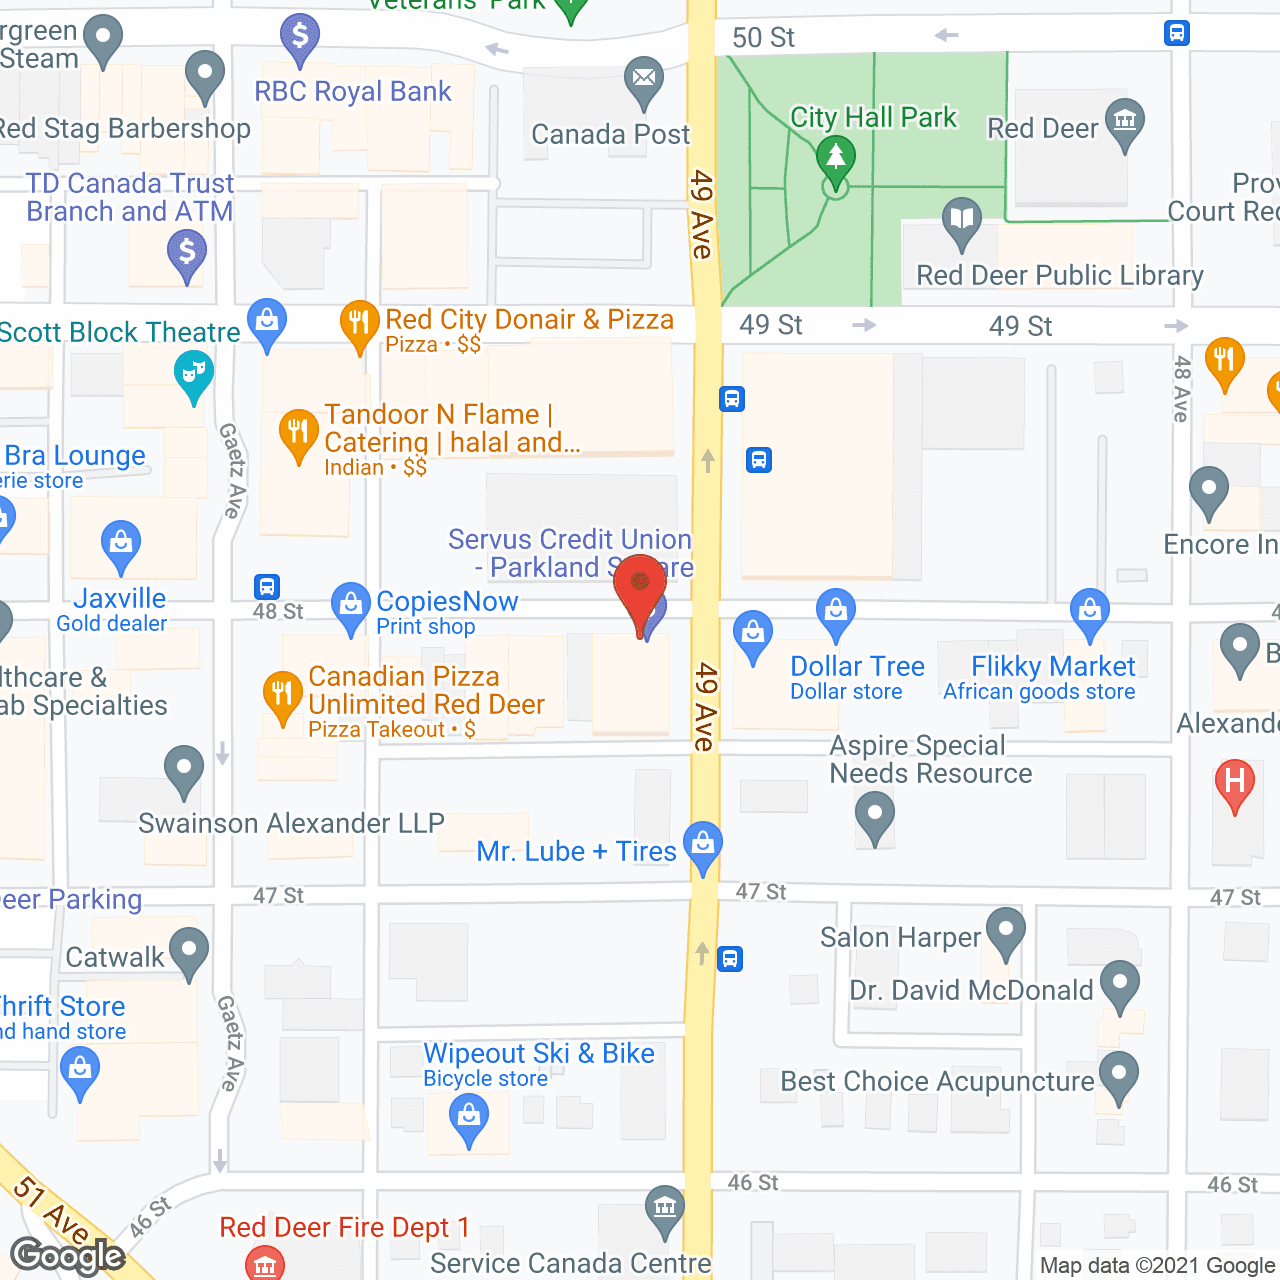 Piper Creek Foundation in google map